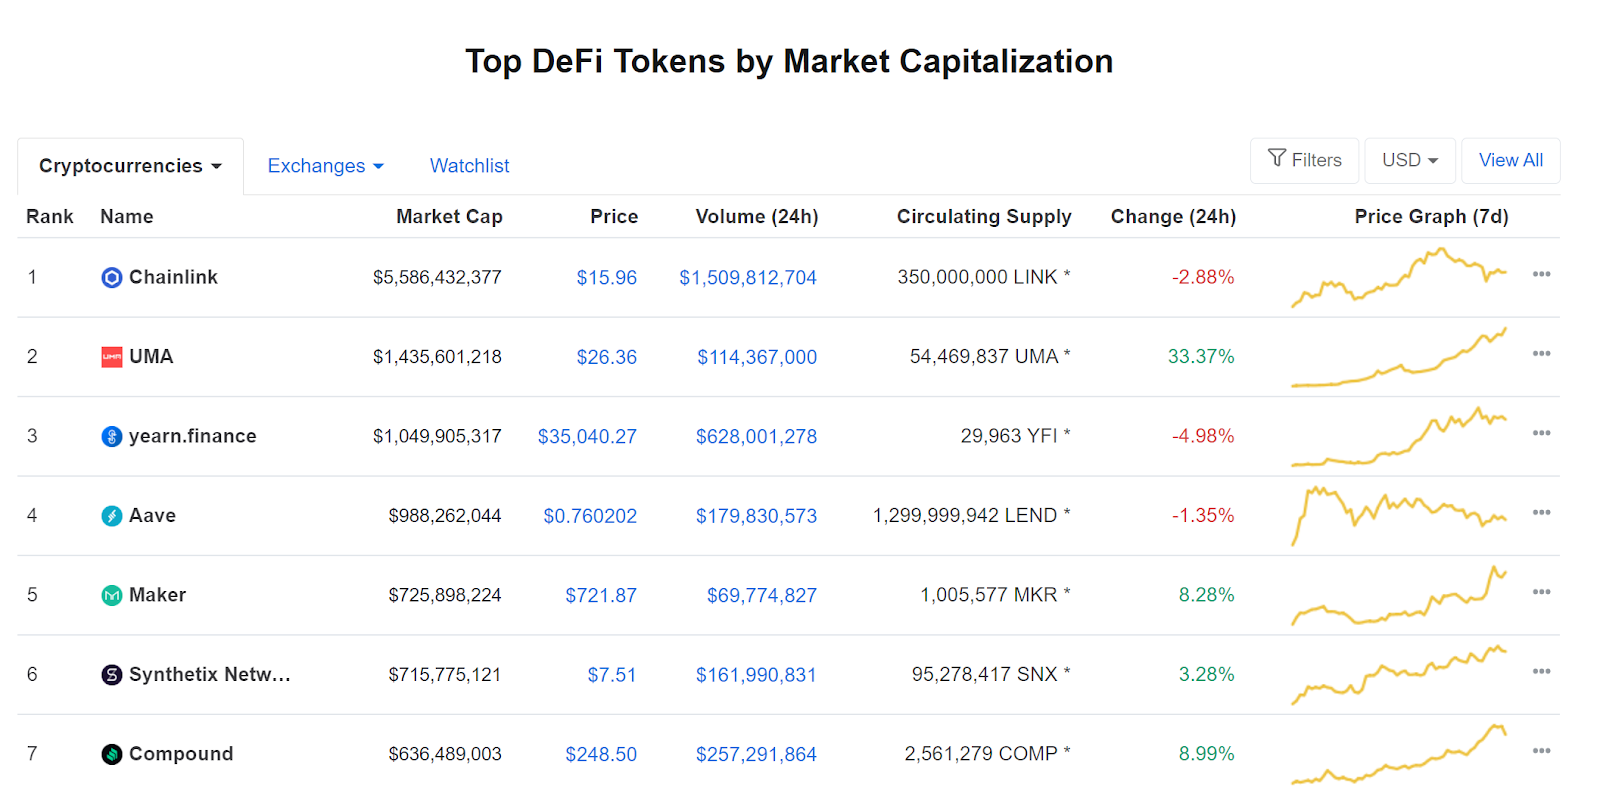 DeFi tokens on CoinMarketCap by market cap